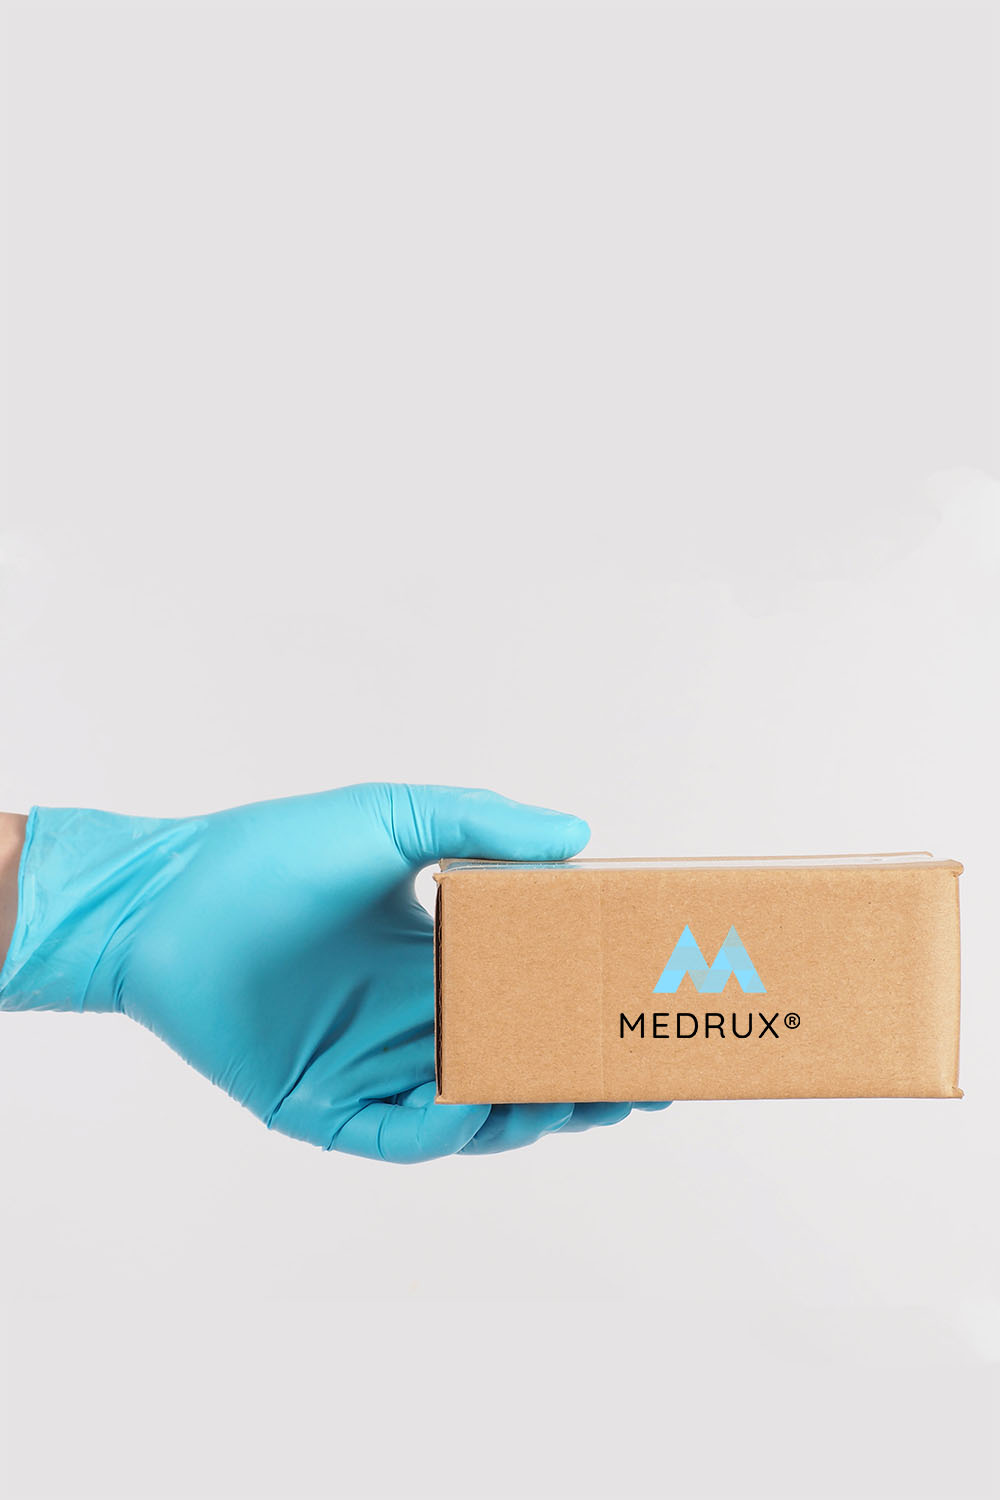 MEDRUX gloves purchase guide